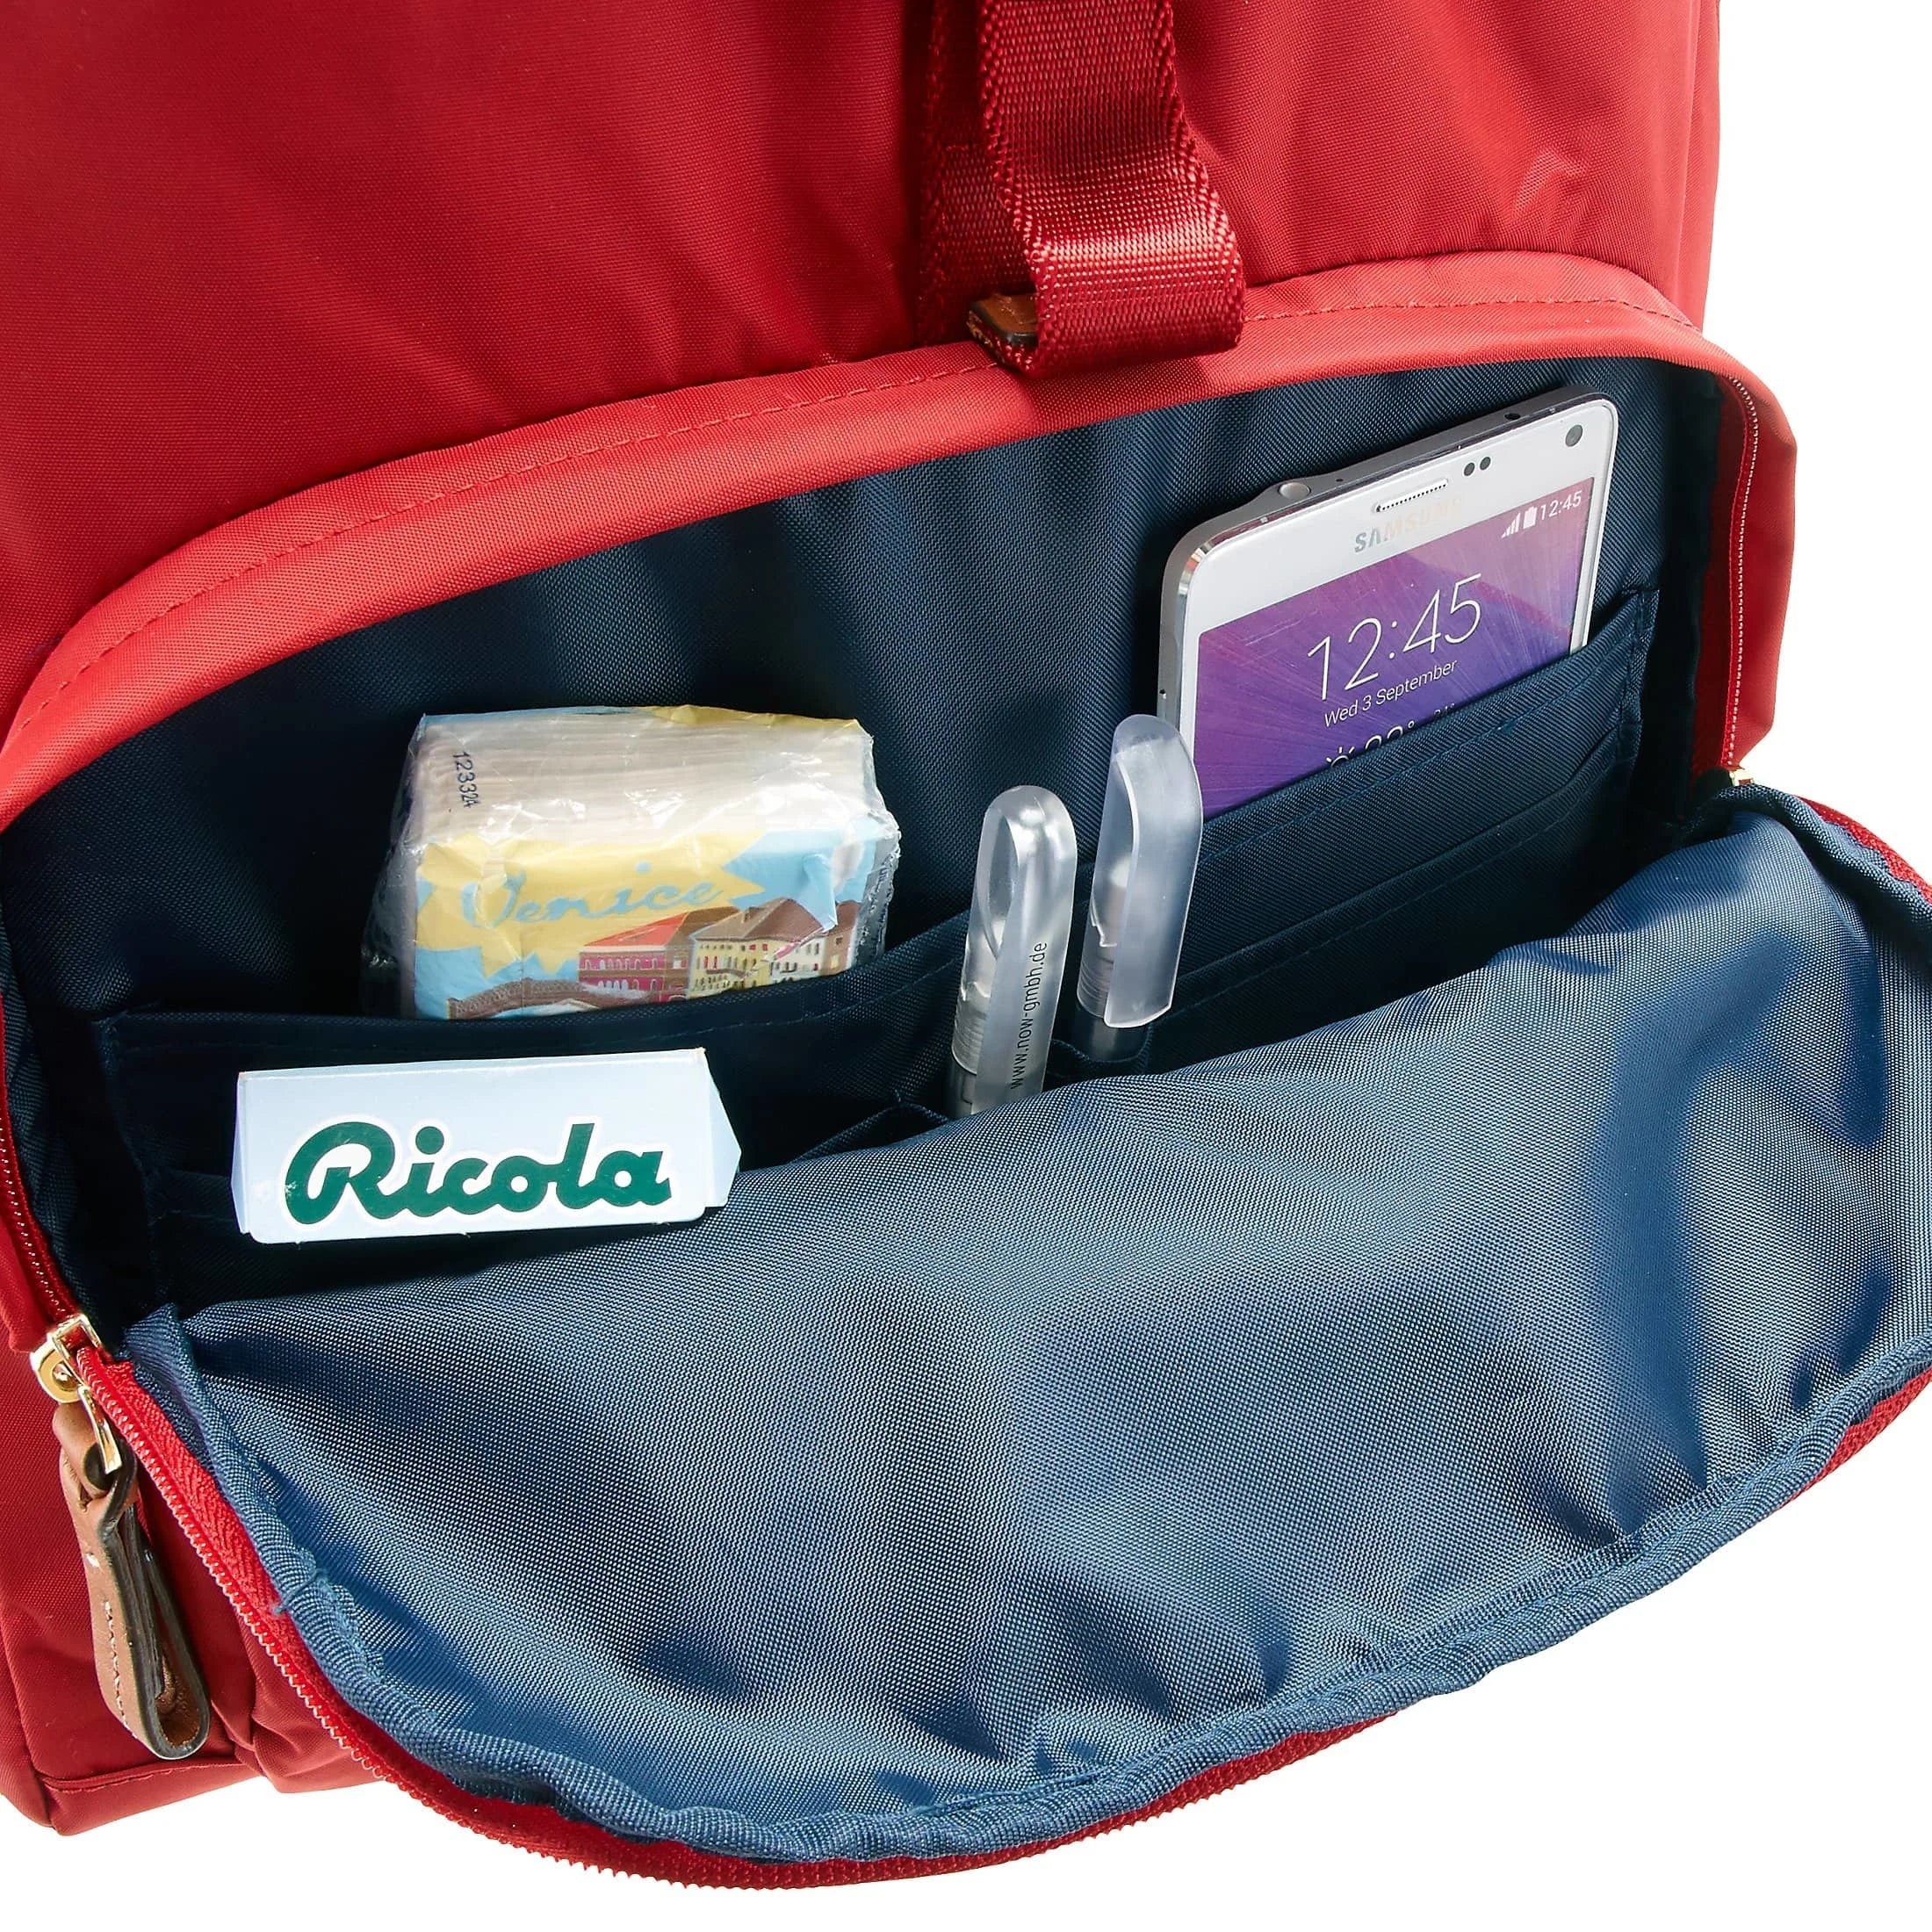 Brics X-Travel backpack 39 cm - olive